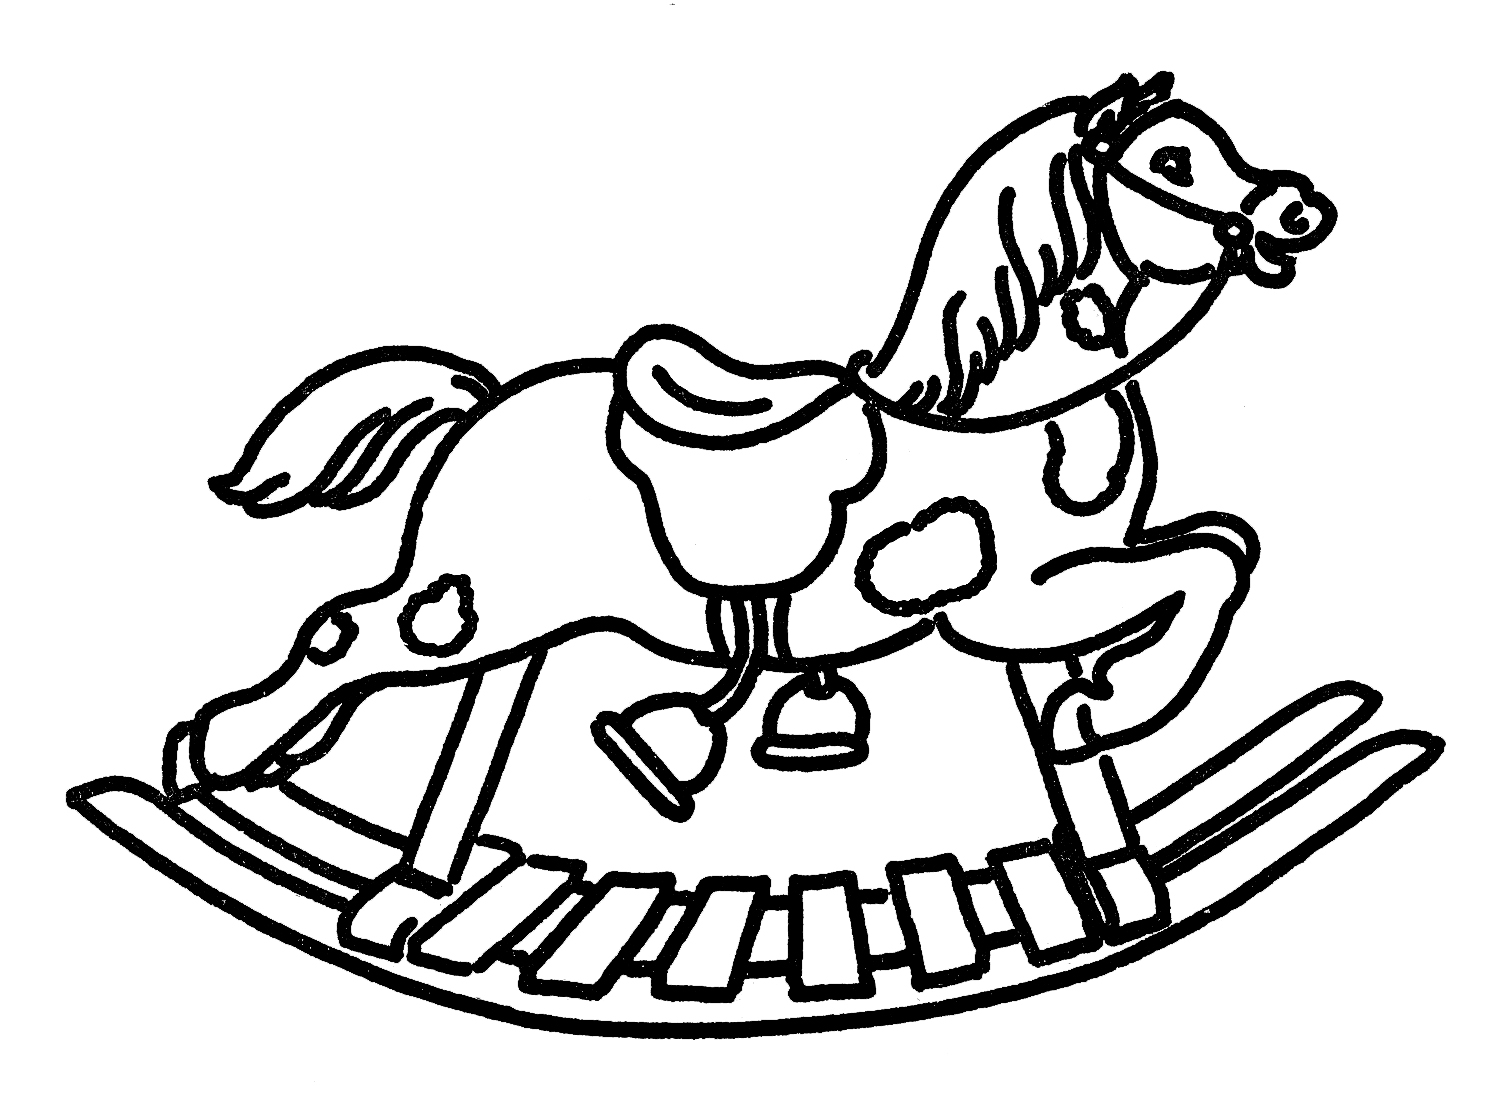 Vintage Line Art Rocking Horse   The Graphics Fairy